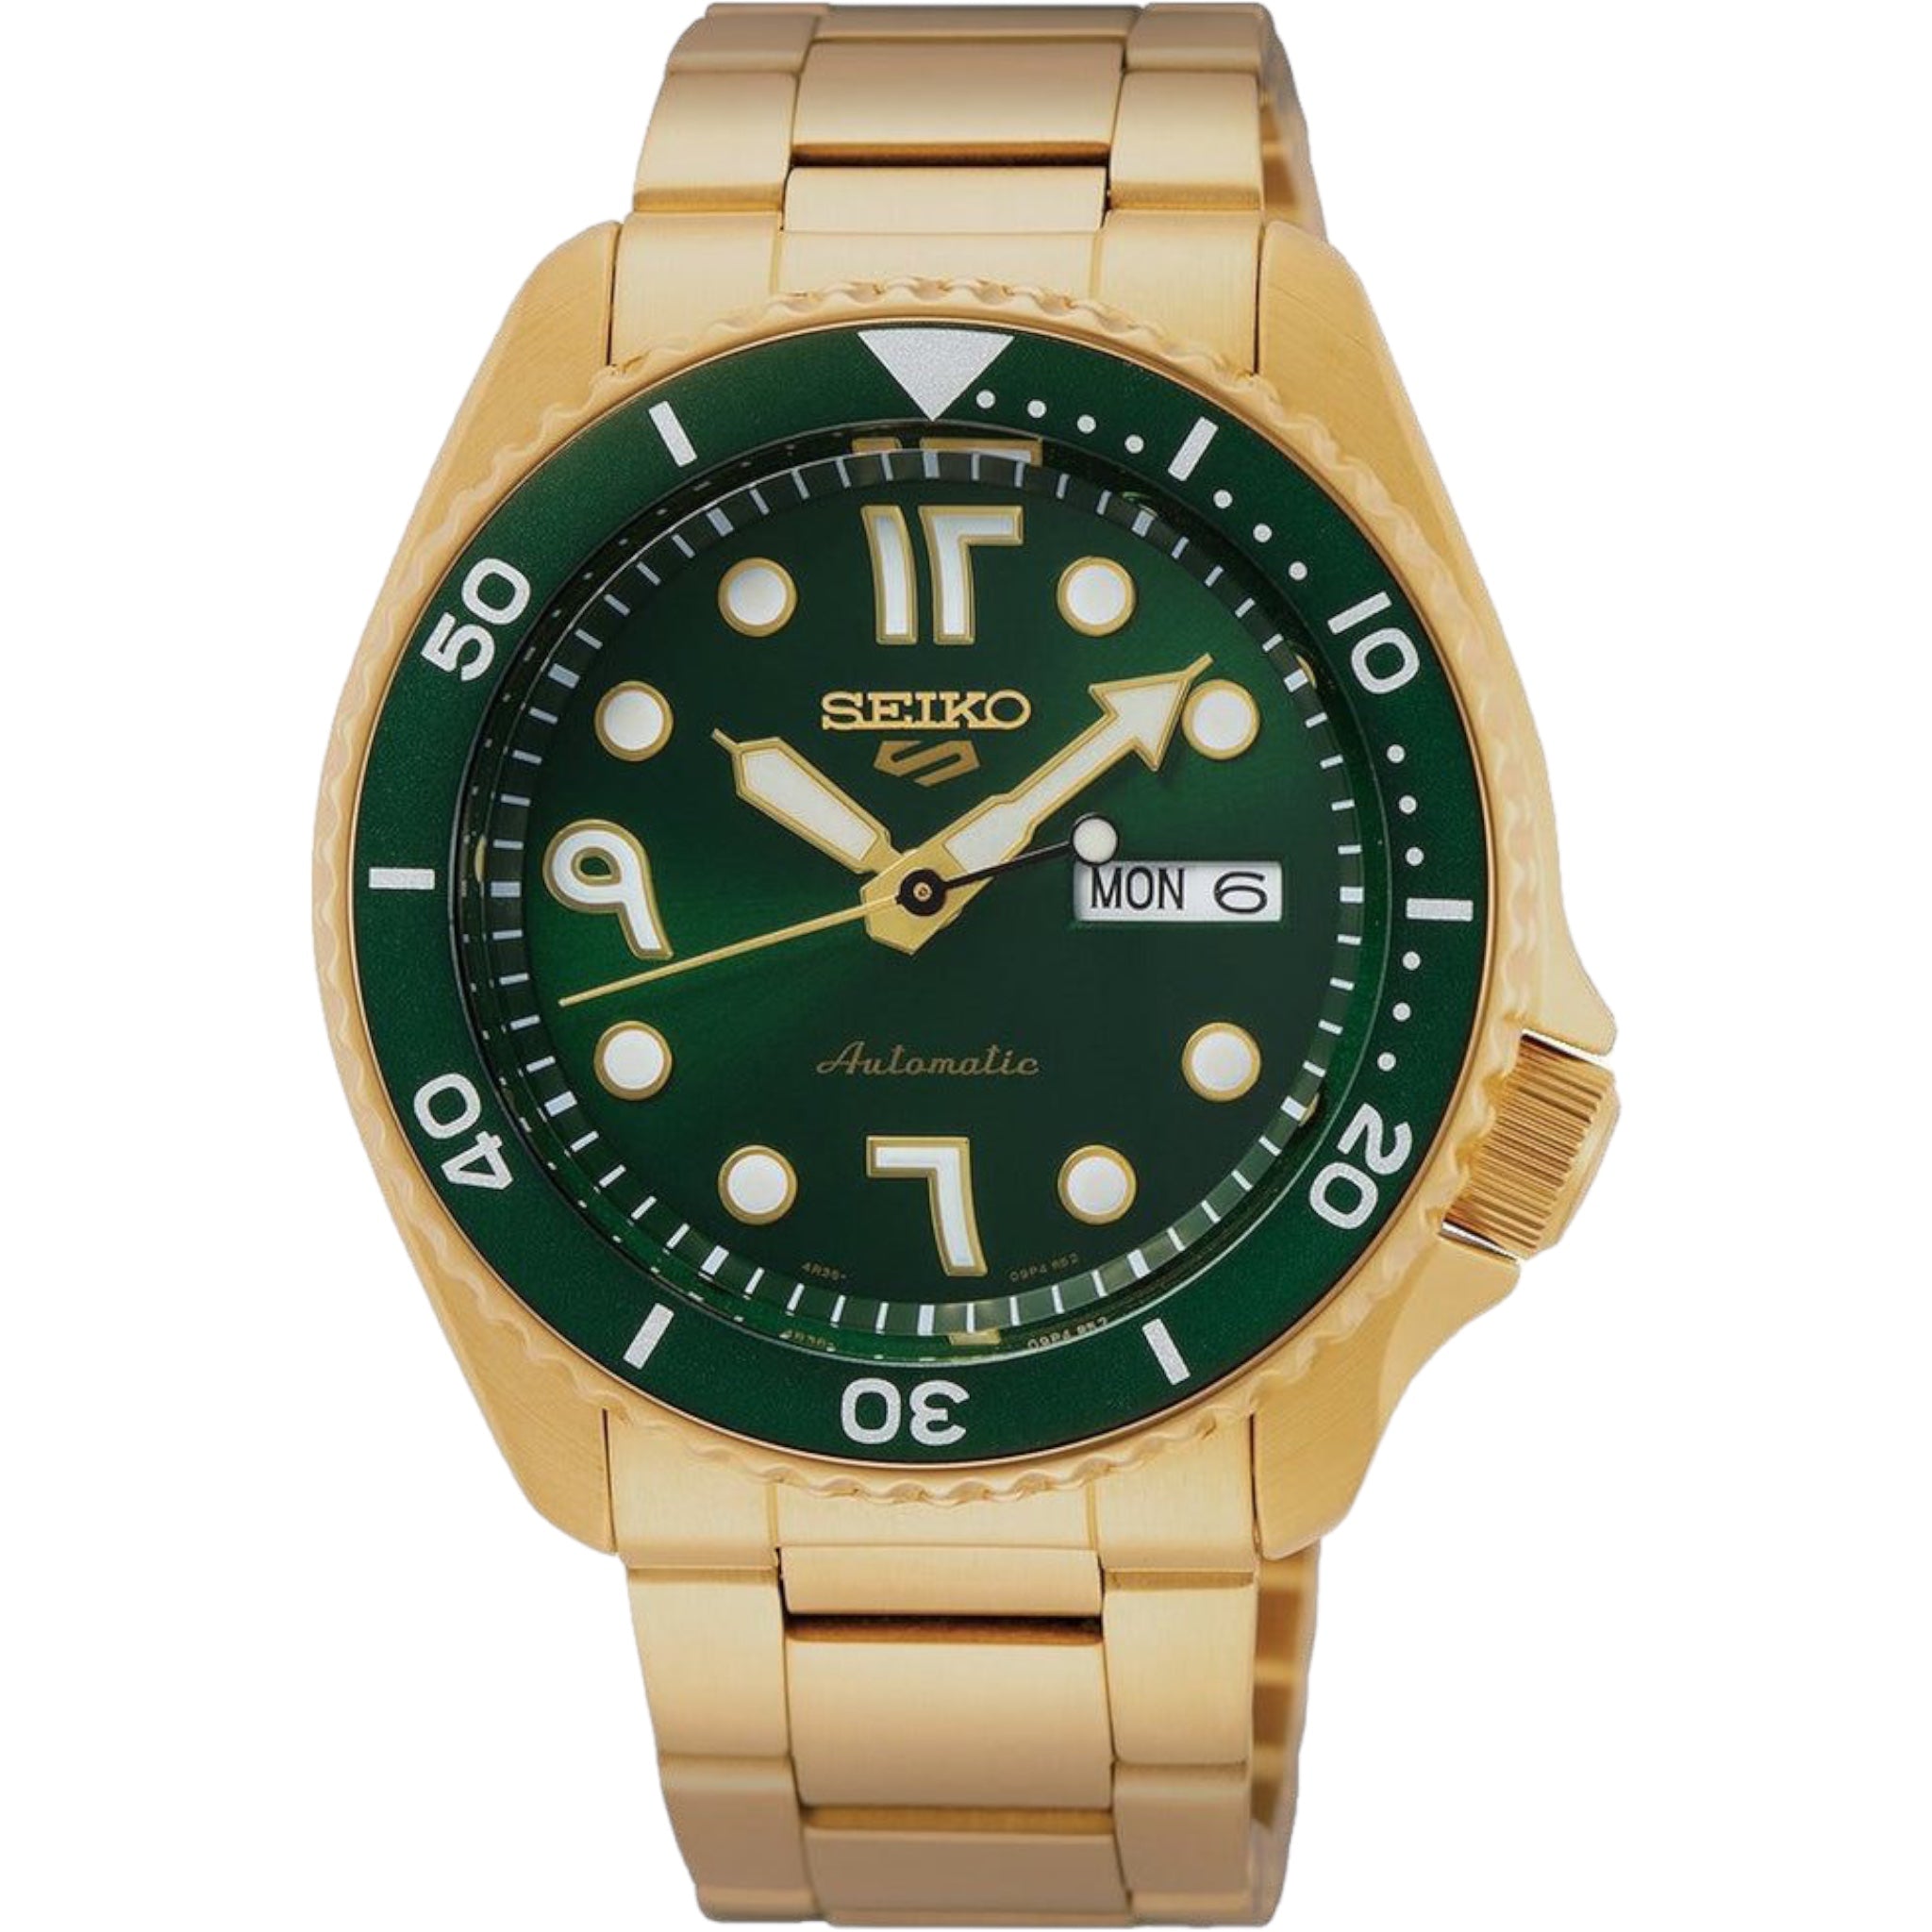 Seiko Arabic Dial SRPF90K1 Green and Gold Watch